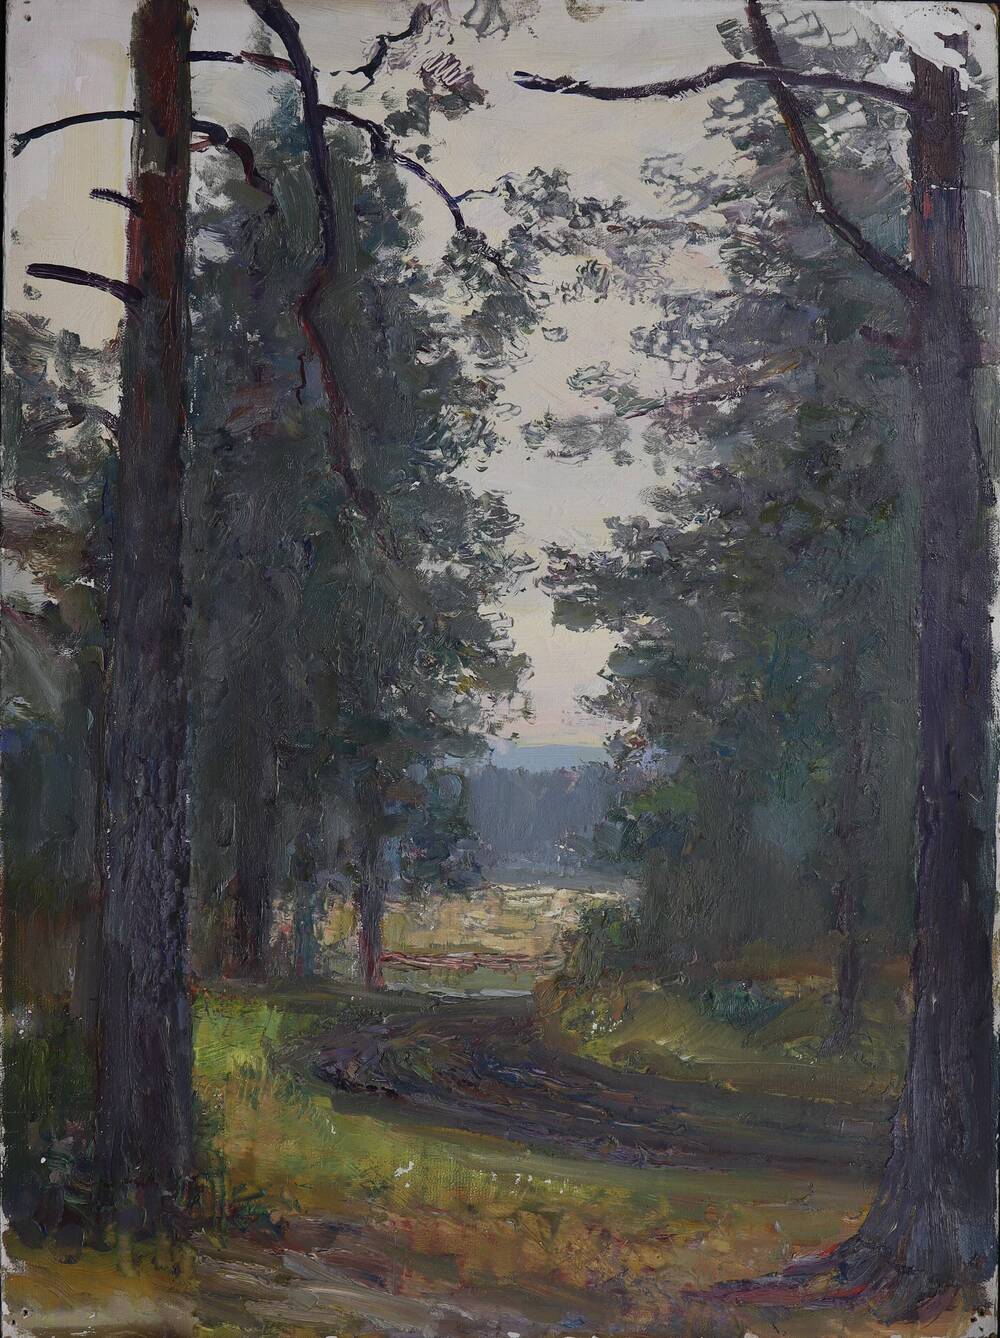 Картина Дорога в лесу